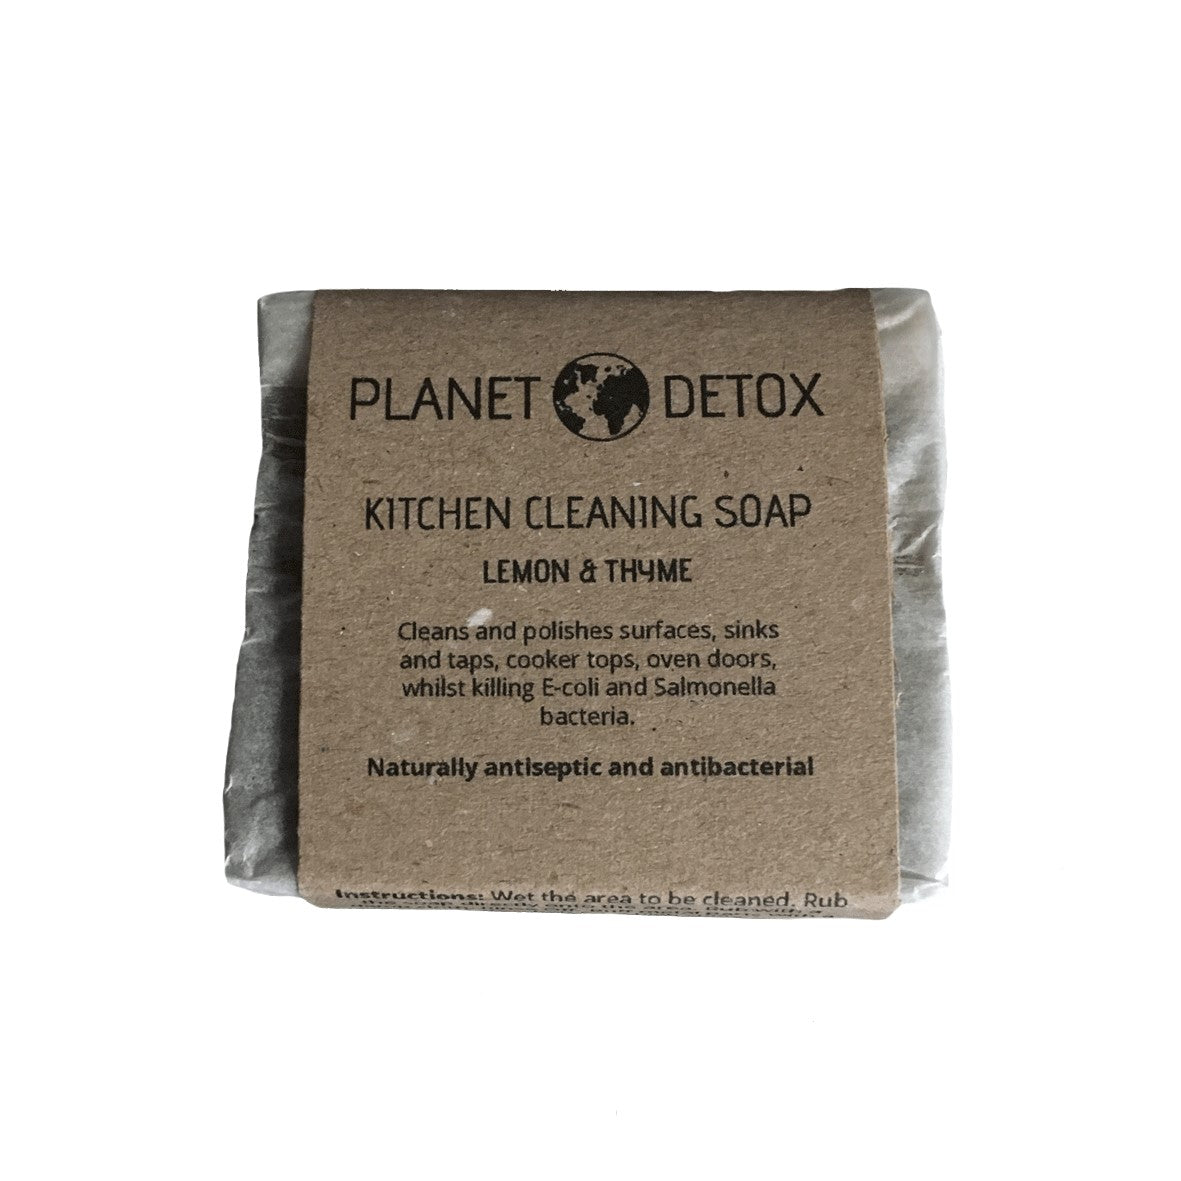 Kitchen Cleaning Soap Bar - Planet Detox